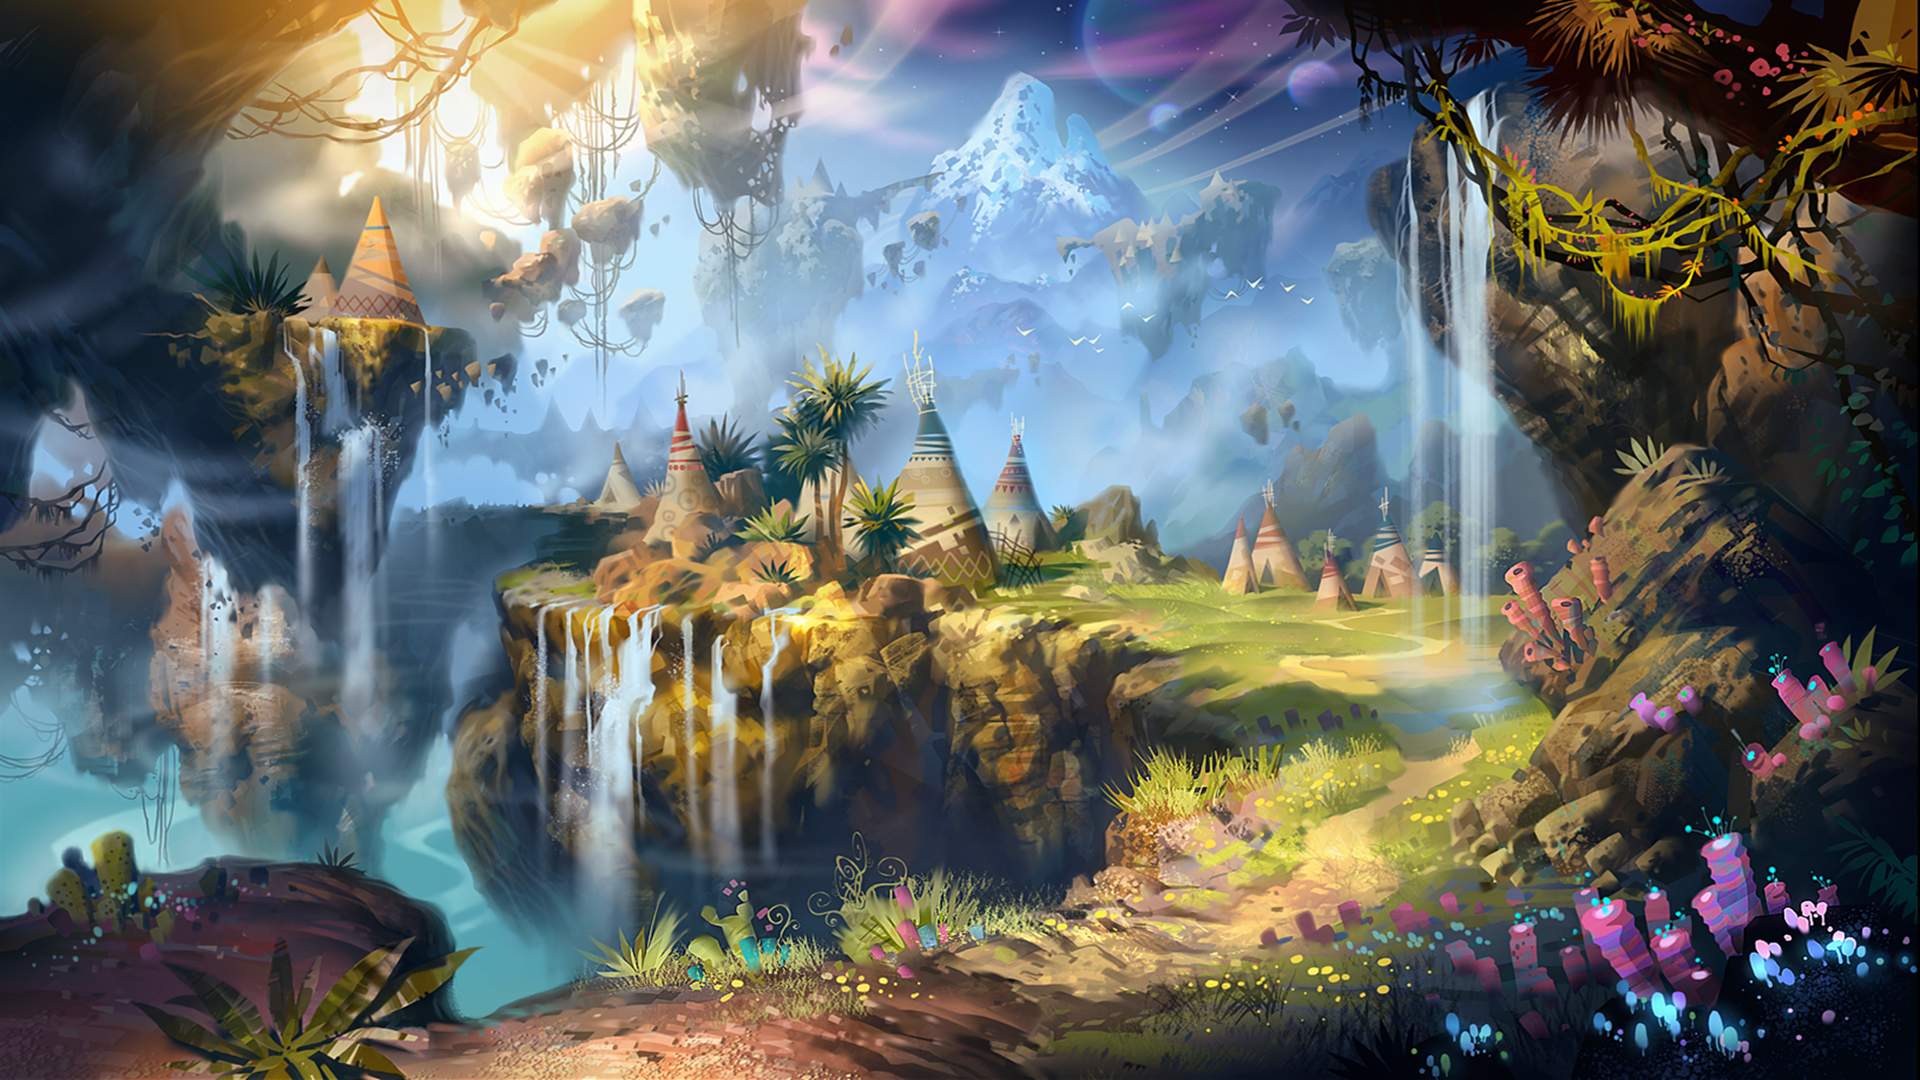 Anime Fantasy Landscape Wallpaper 1080p For Free Wallpaper. Fantasy art landscapes, Fantasy landscape, Landscape wallpaper